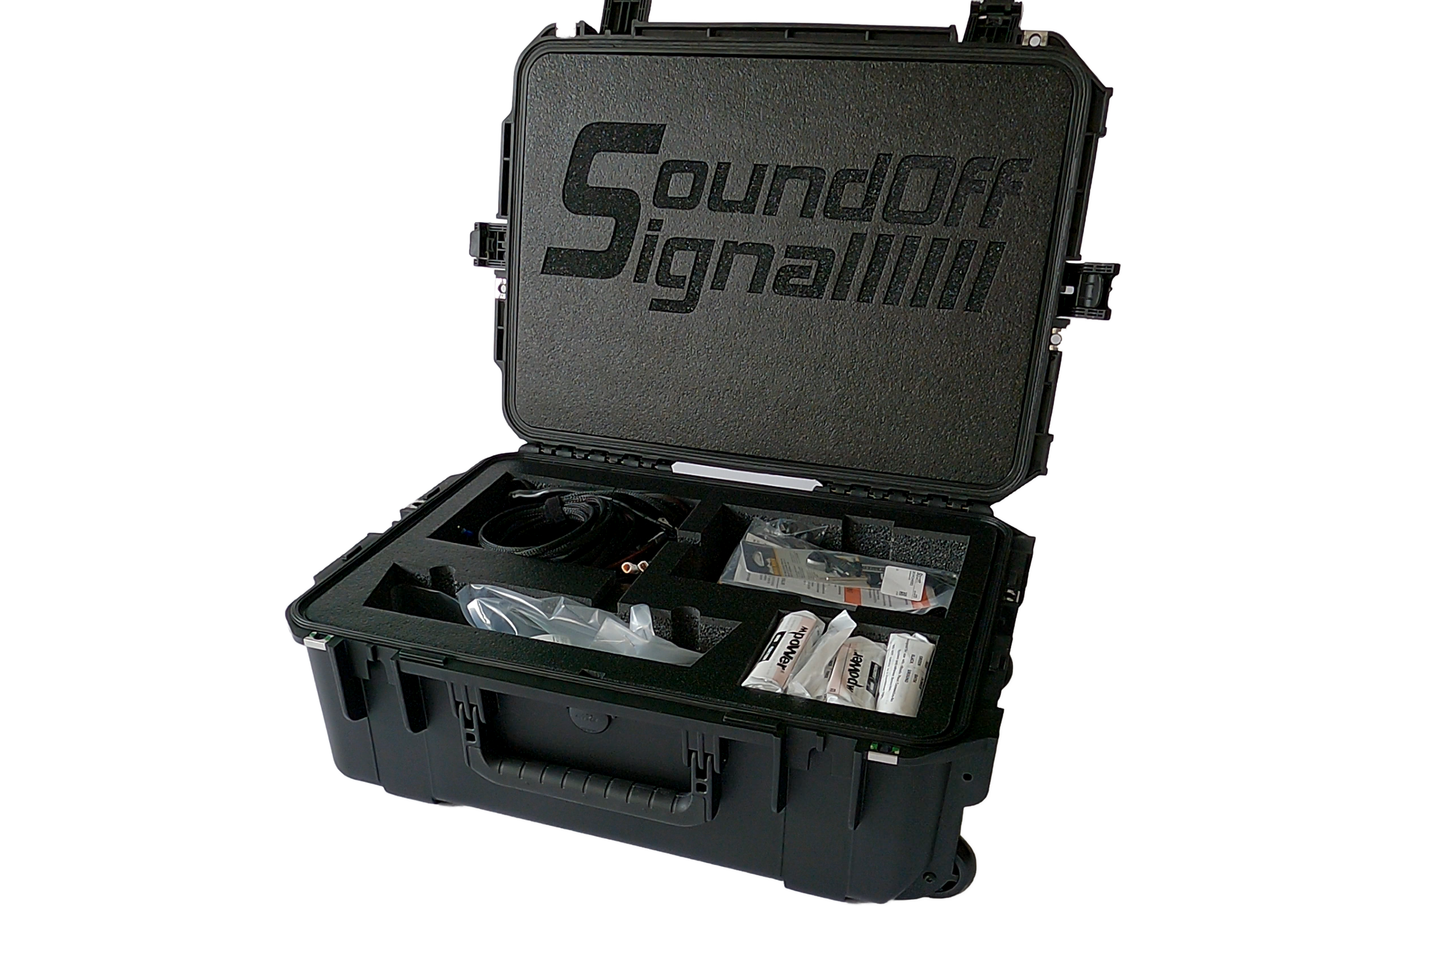 Soundoff Signal ETRDMP002 Rapid Deployment Vehicle Warning Kit